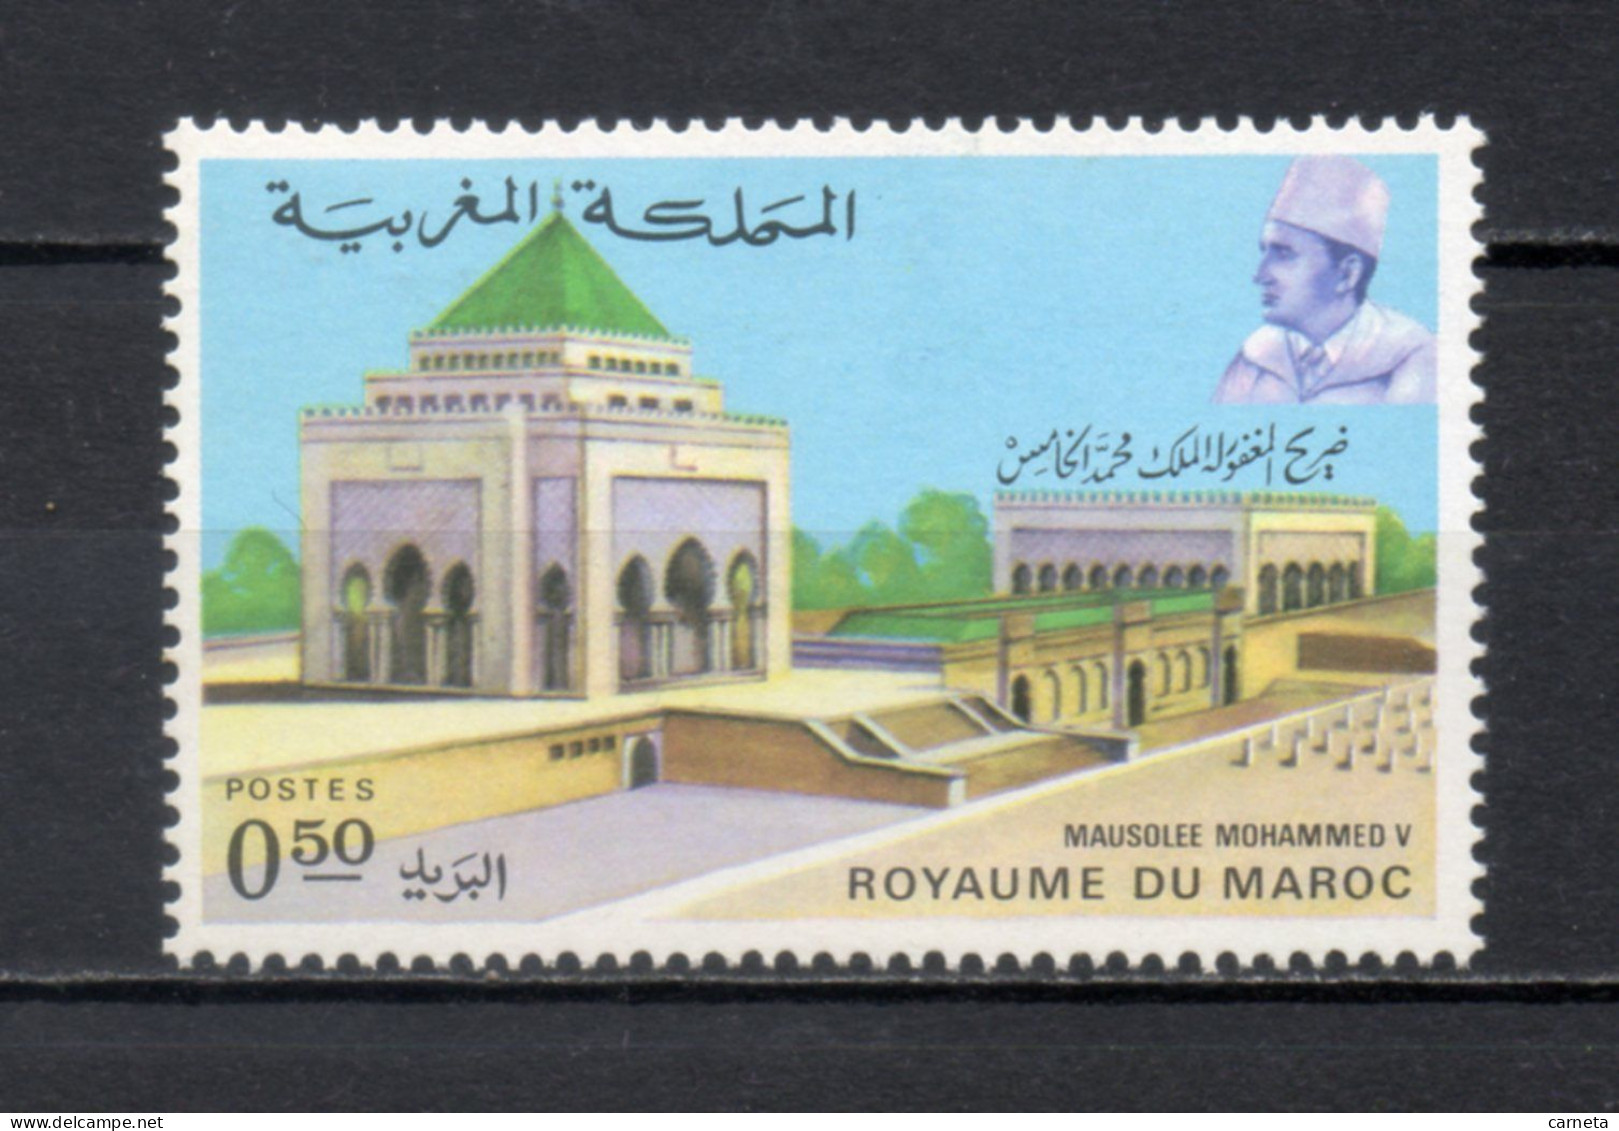 MAROC N°  623   NEUF SANS CHARNIERE  COTE  0.70€   MAUSOLEE DE MOHAMED V - Marruecos (1956-...)